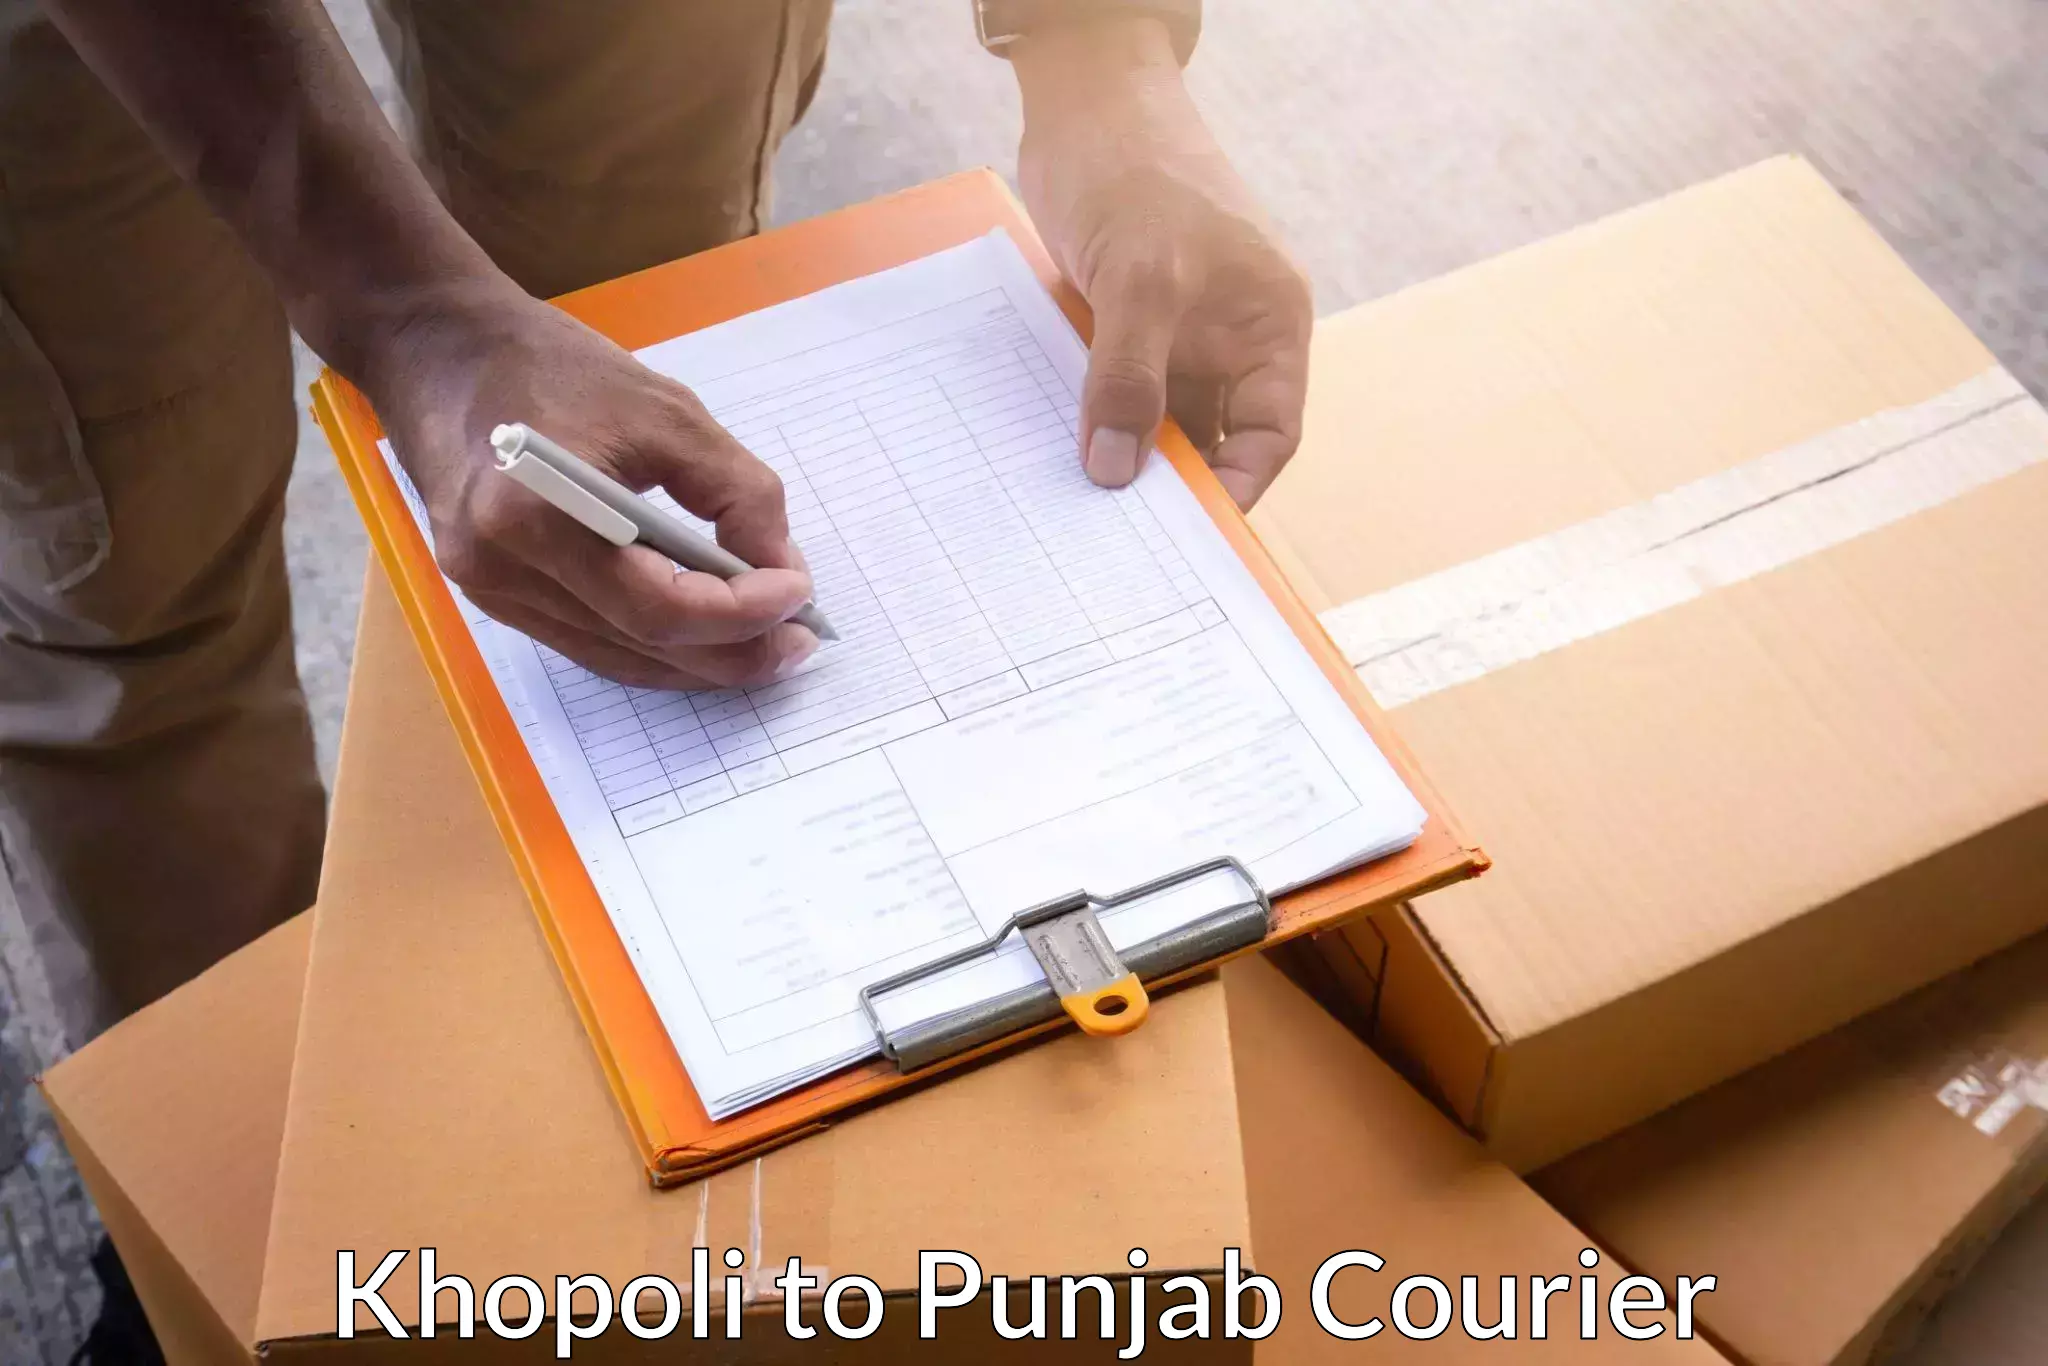 Next day courier Khopoli to Amritsar